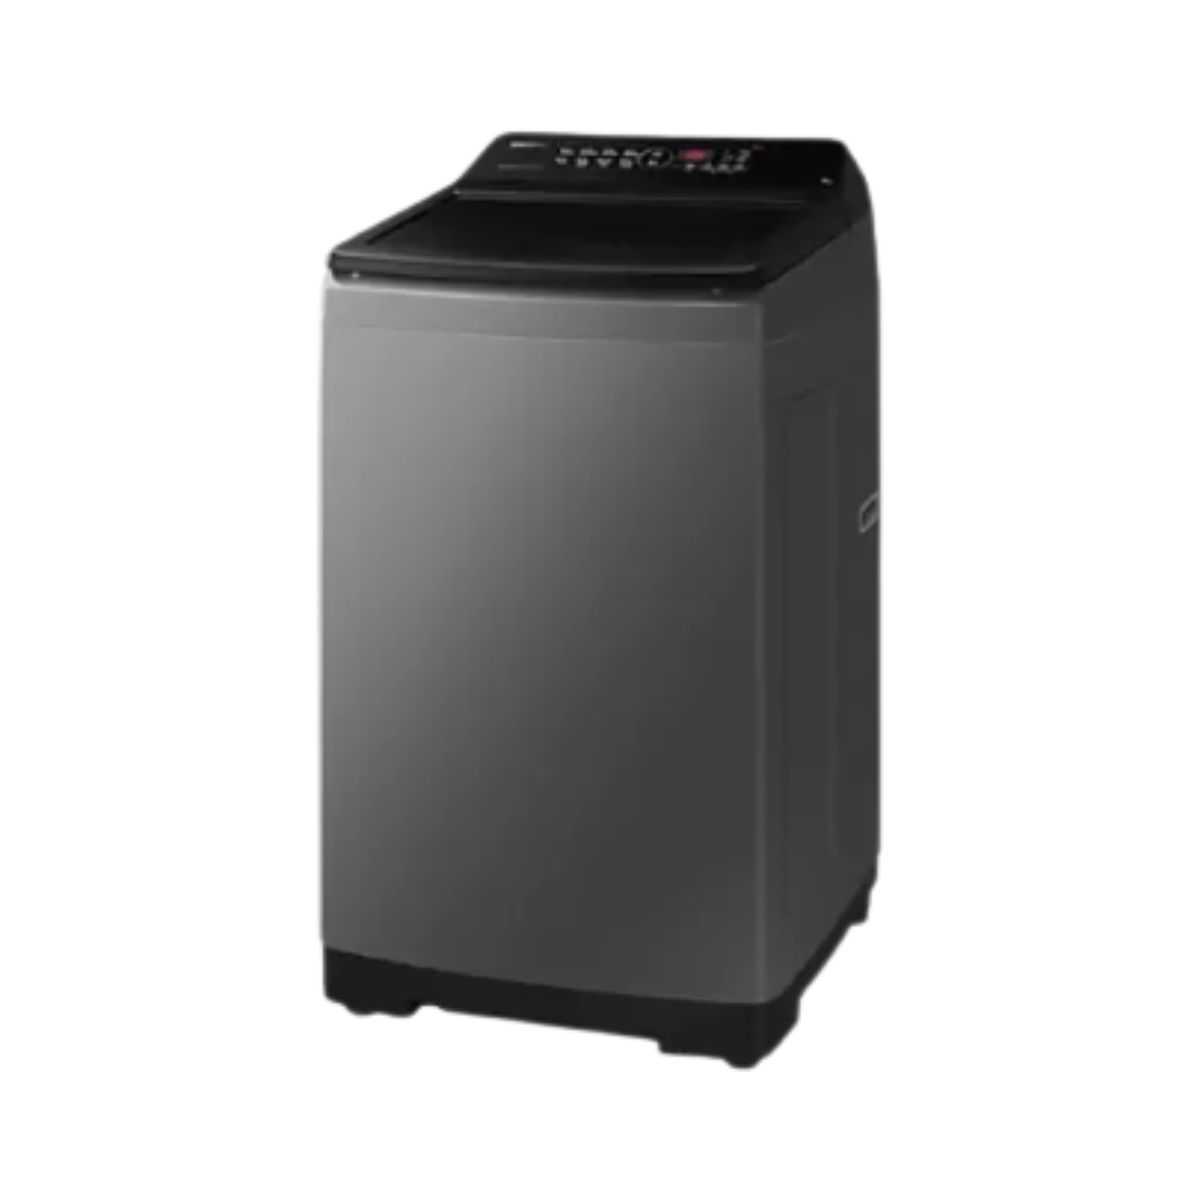 Samsung Ecobubble Top Load Washing Machine - WA80BG4441BD - 8Kg - Black